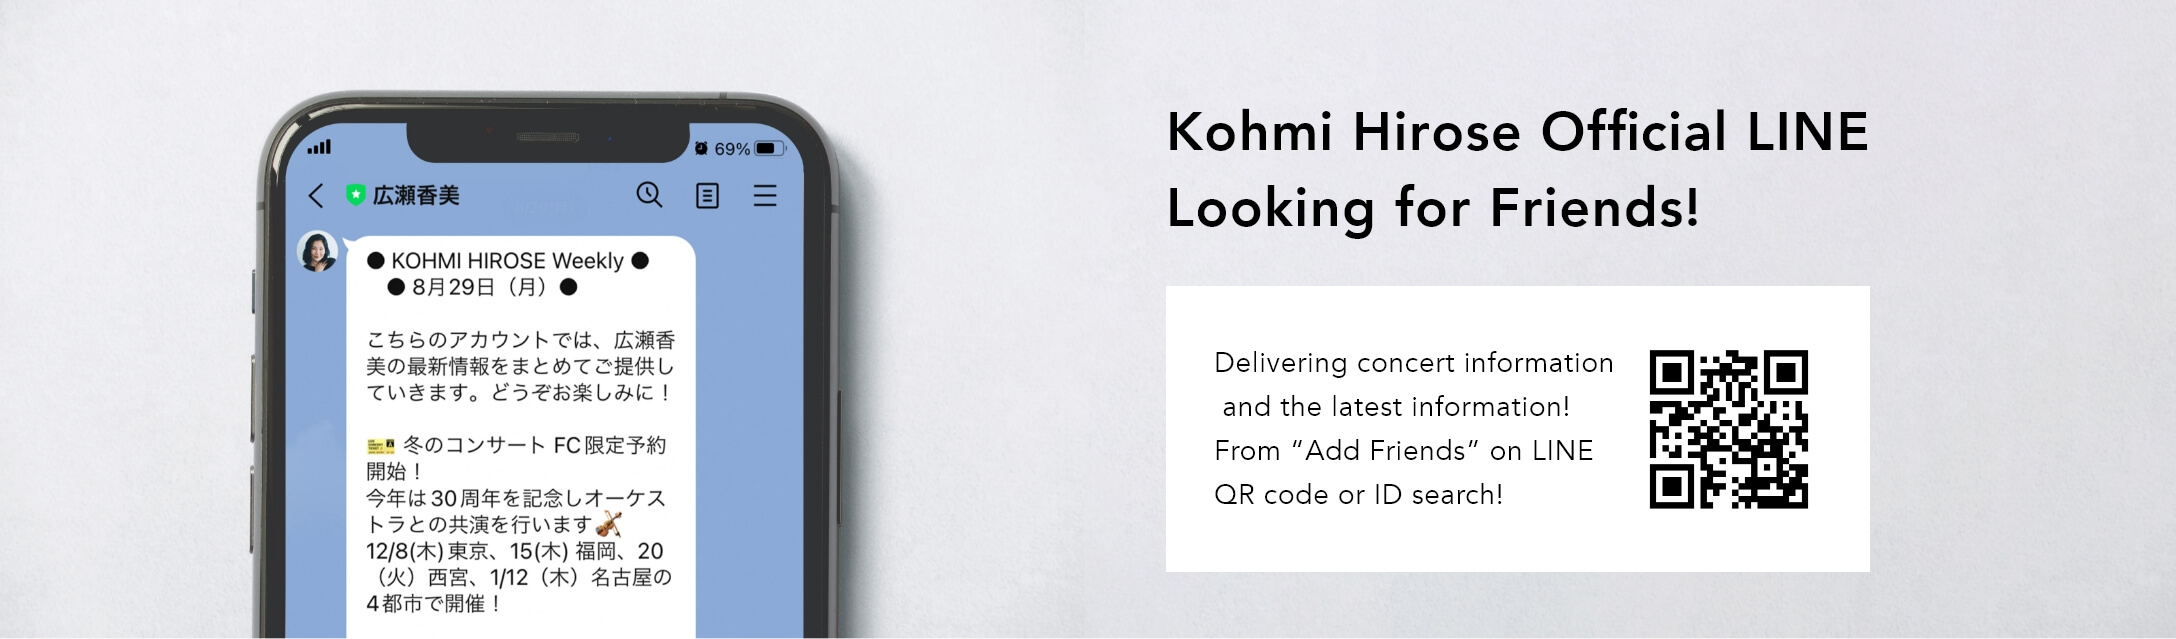 Kohmi Hirose Official LINE Looking for Friends!